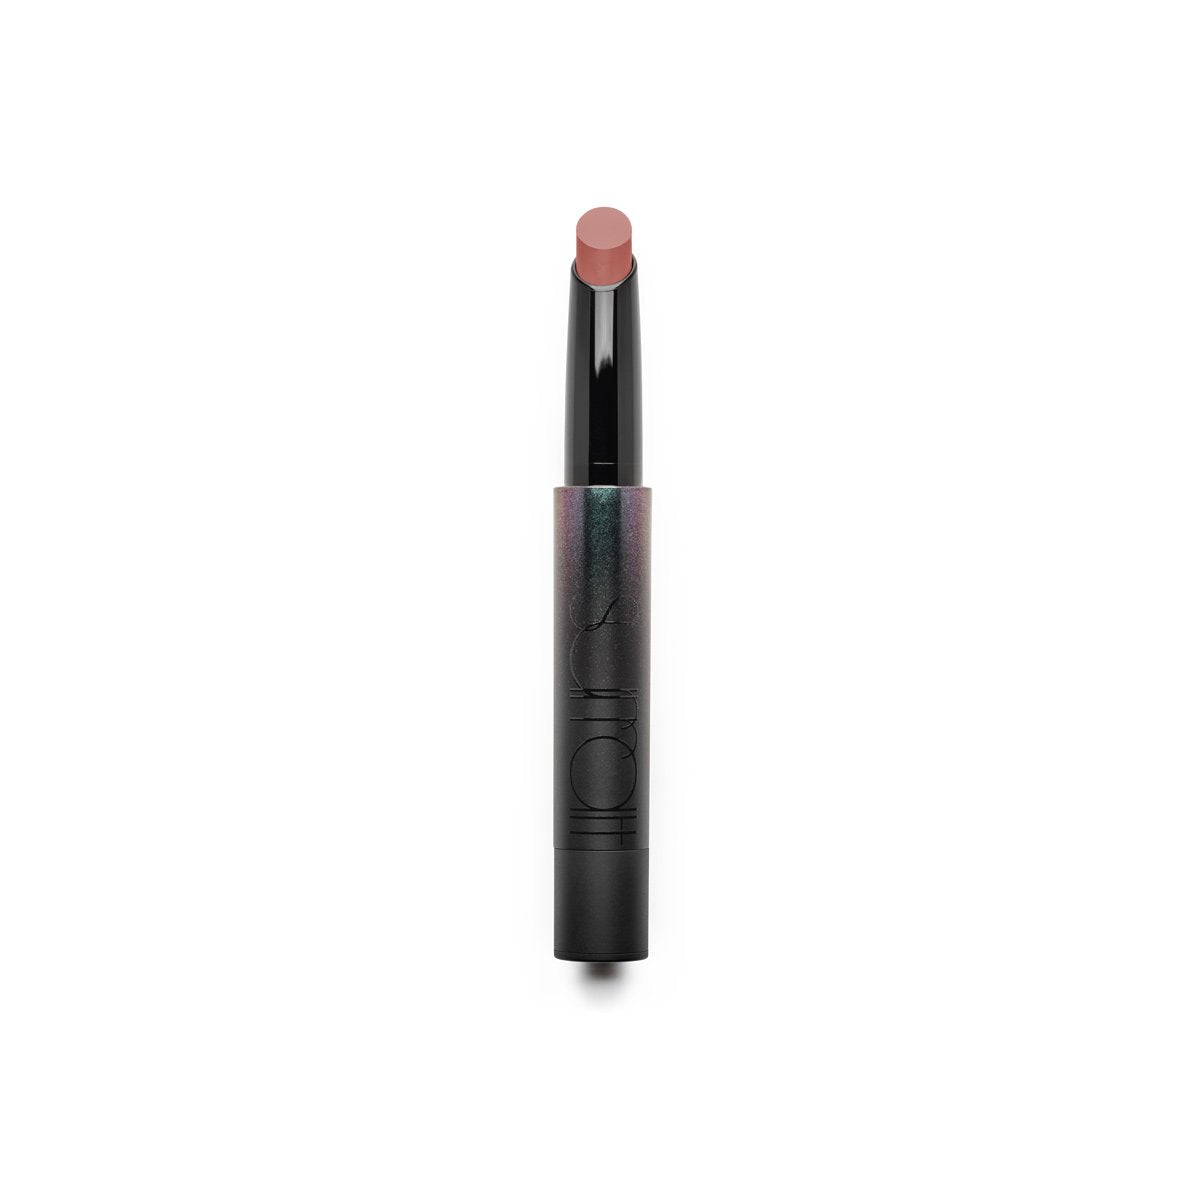 BANDY - PERFECT WARM ROSE - creamy moisturizing lipstick lip balm in warm rose shade